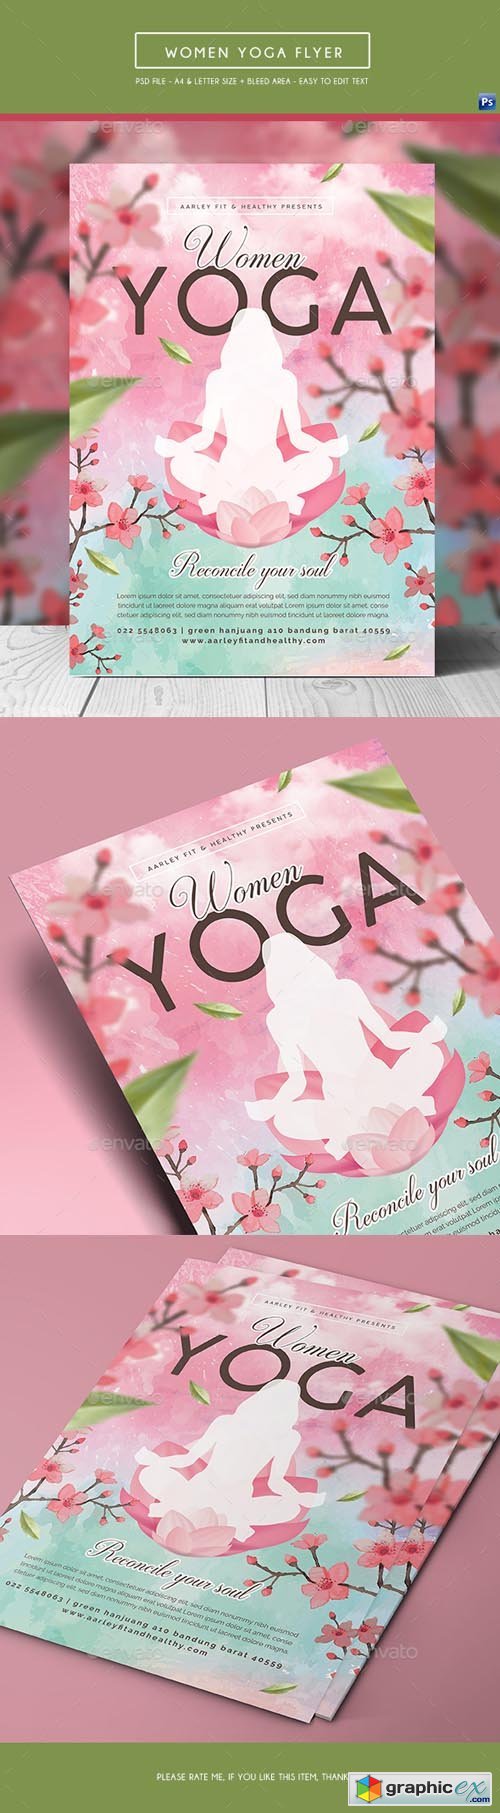 Women Yoga Flyer / Poster